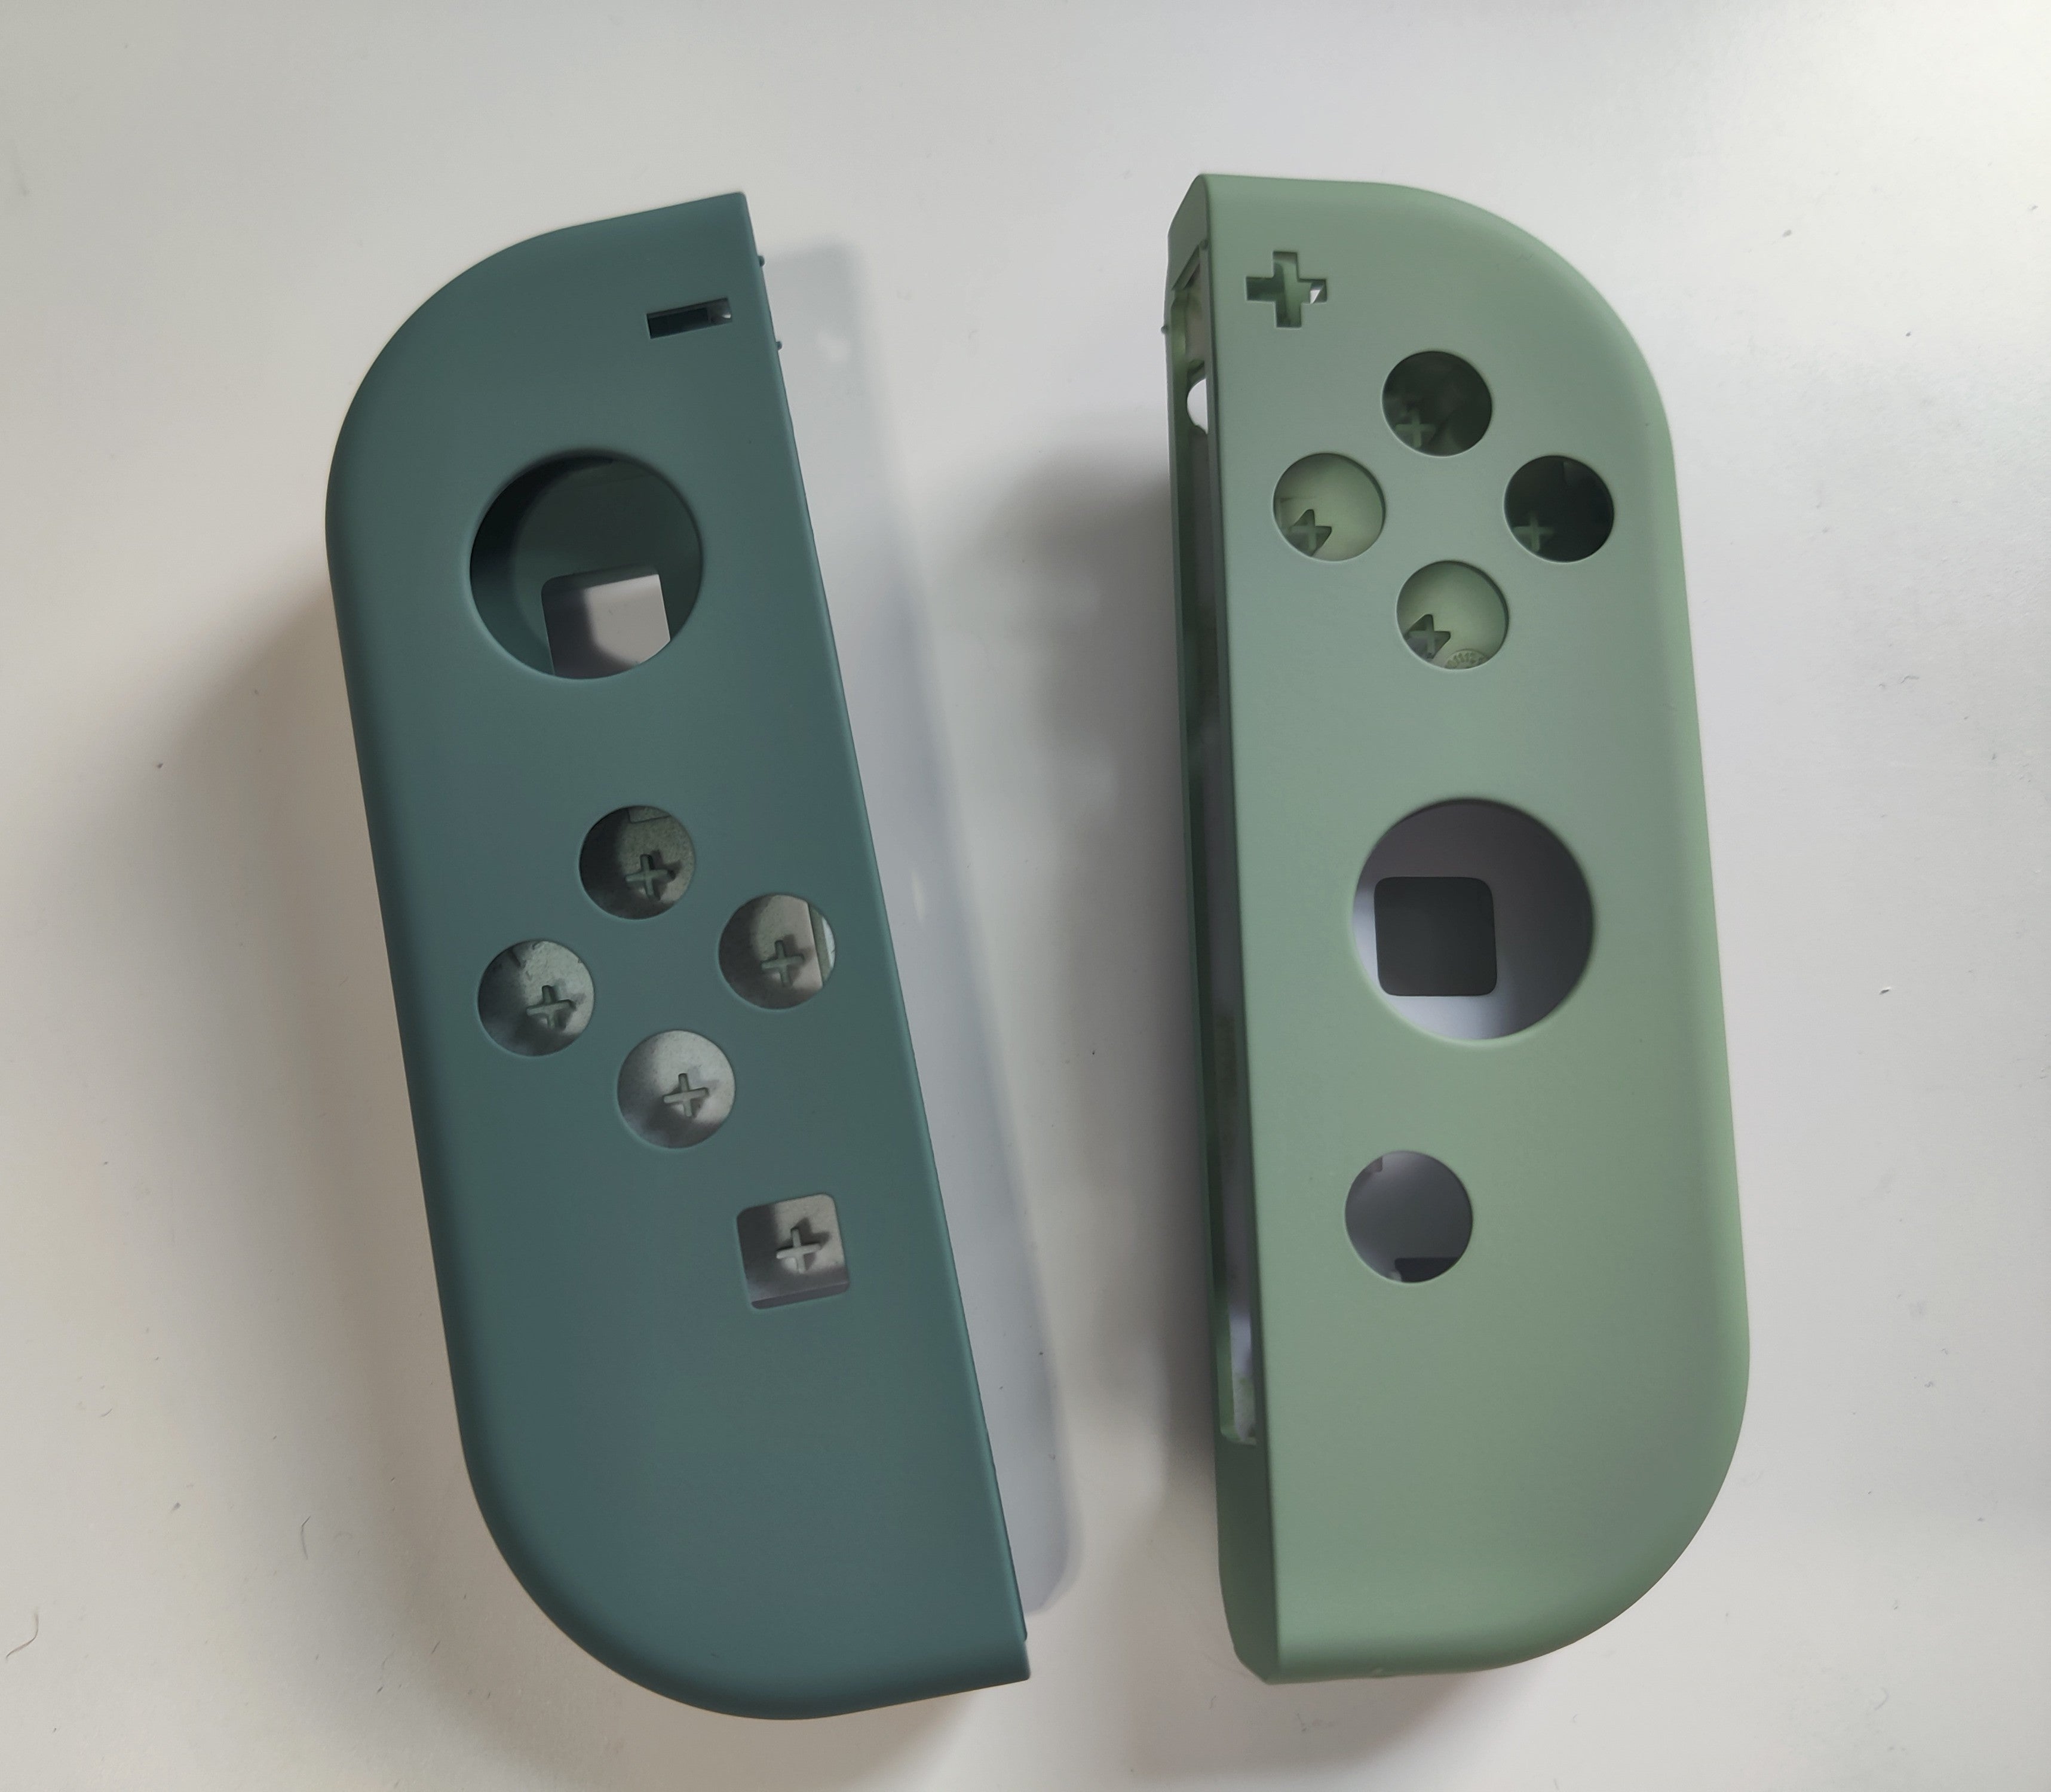 Custom Nintendo Switch JoyCon Matcha Green & Light Cream